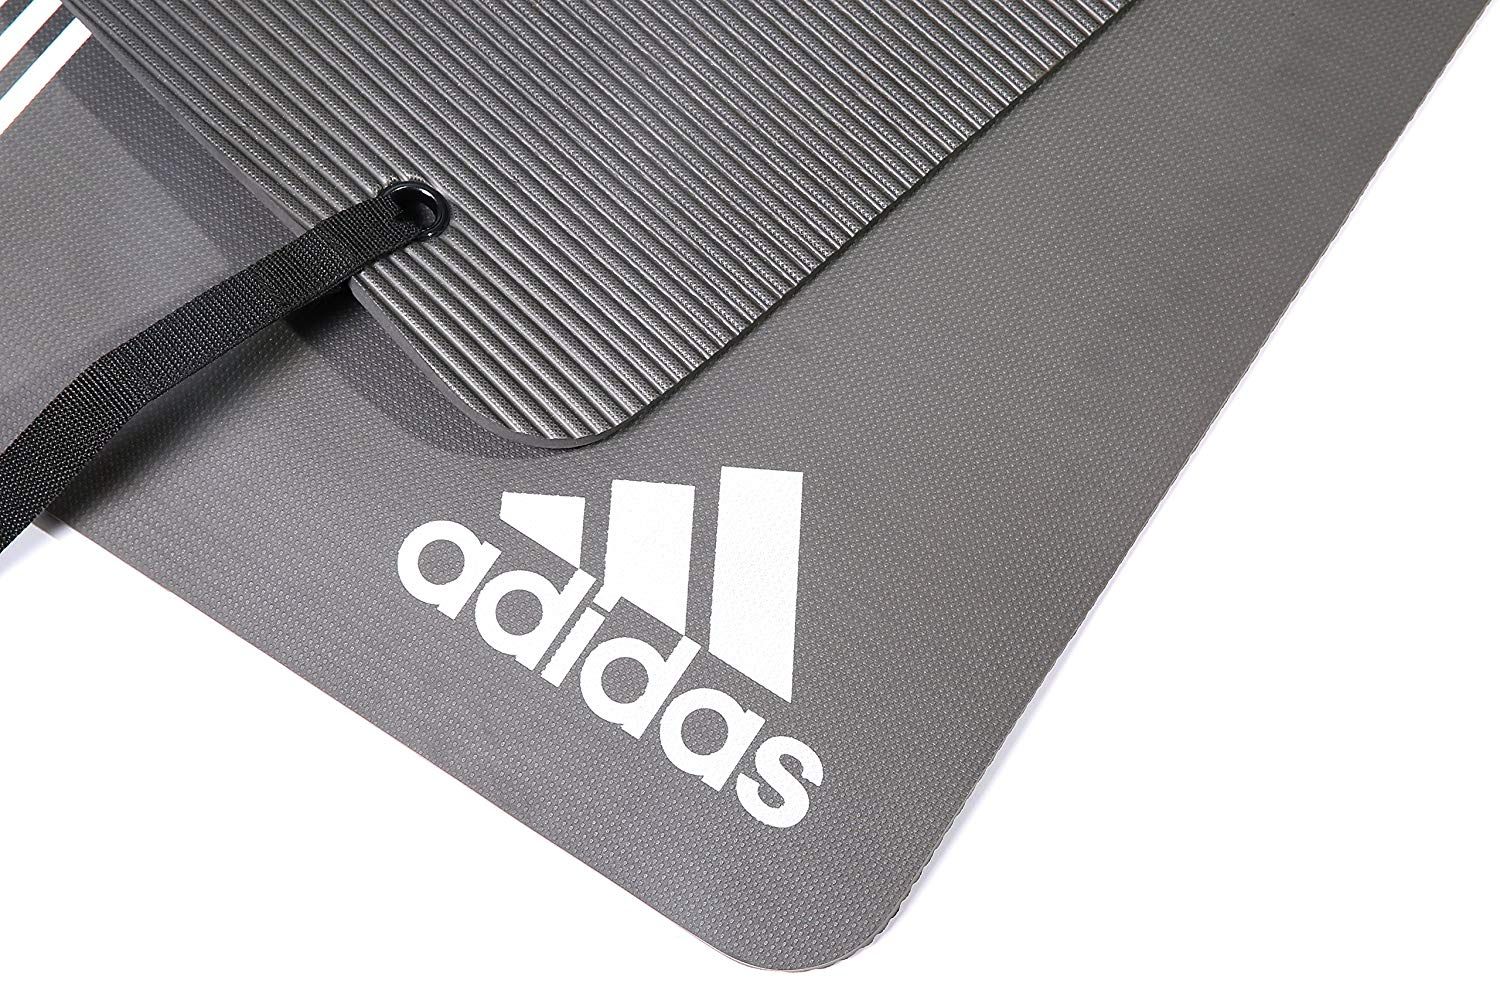 Adidas Yoga Mat Bag, Elite Fitness NZ